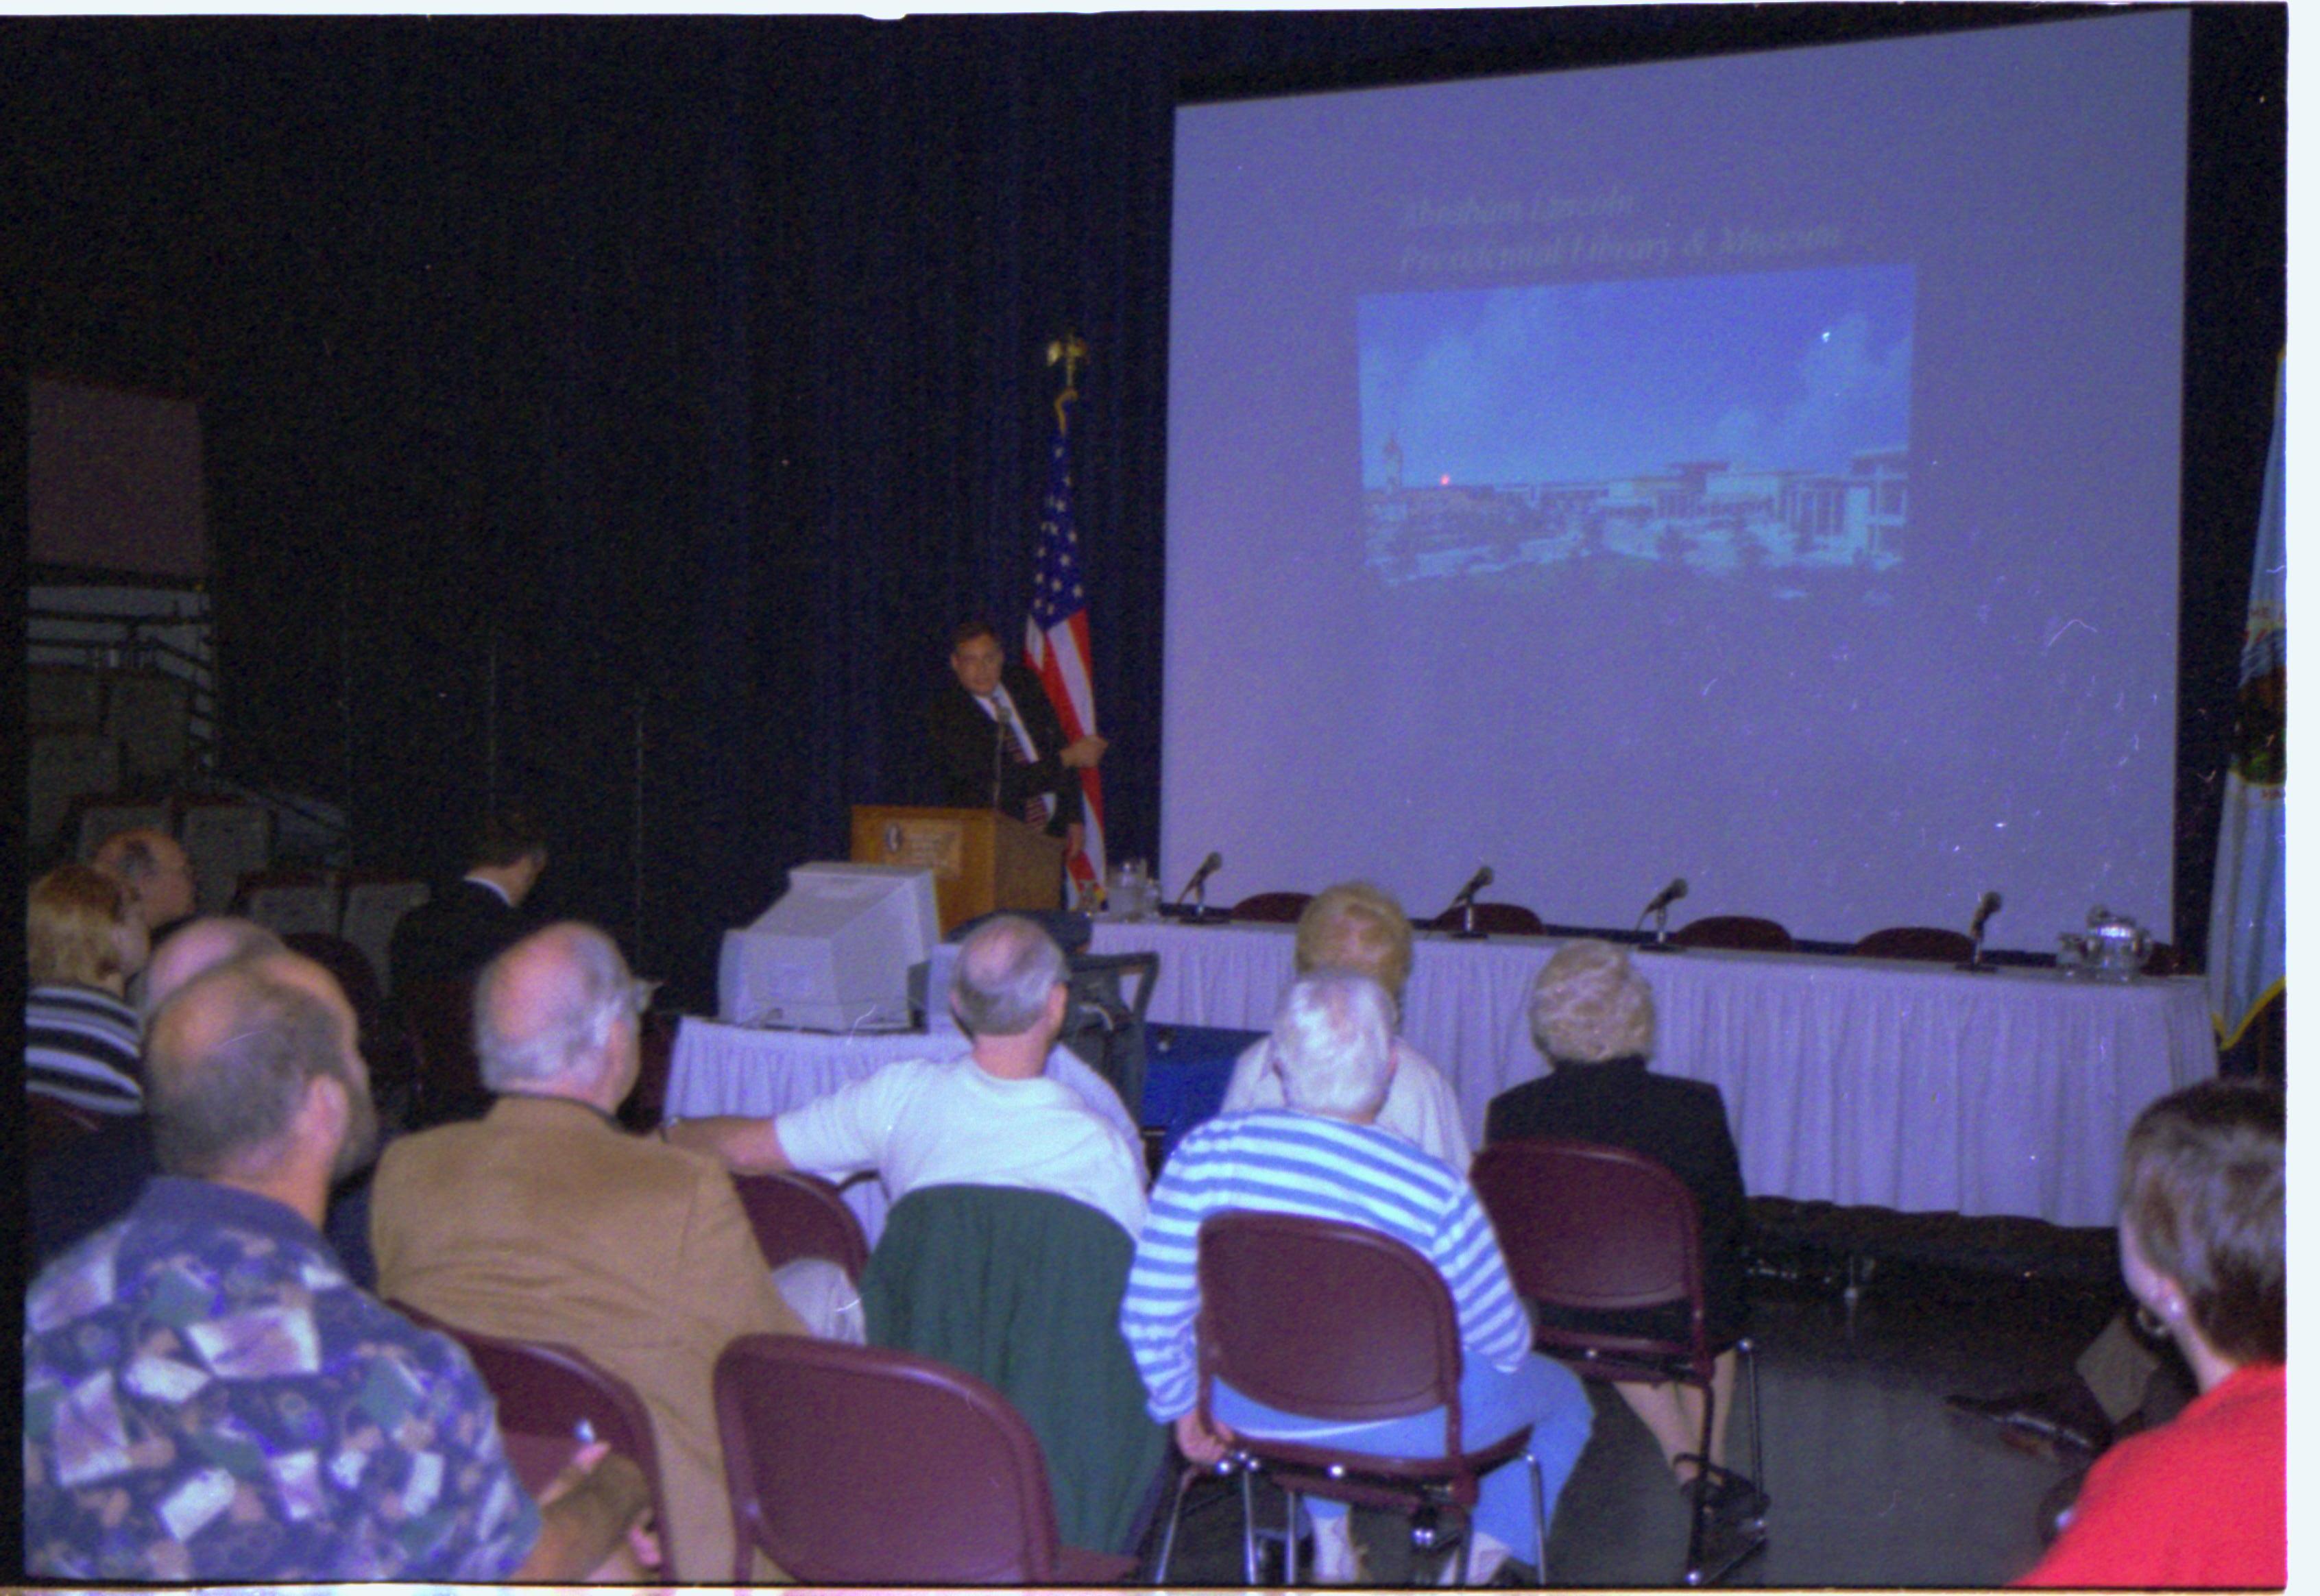 Speaker showing slides on screen. Colloquium, 2001